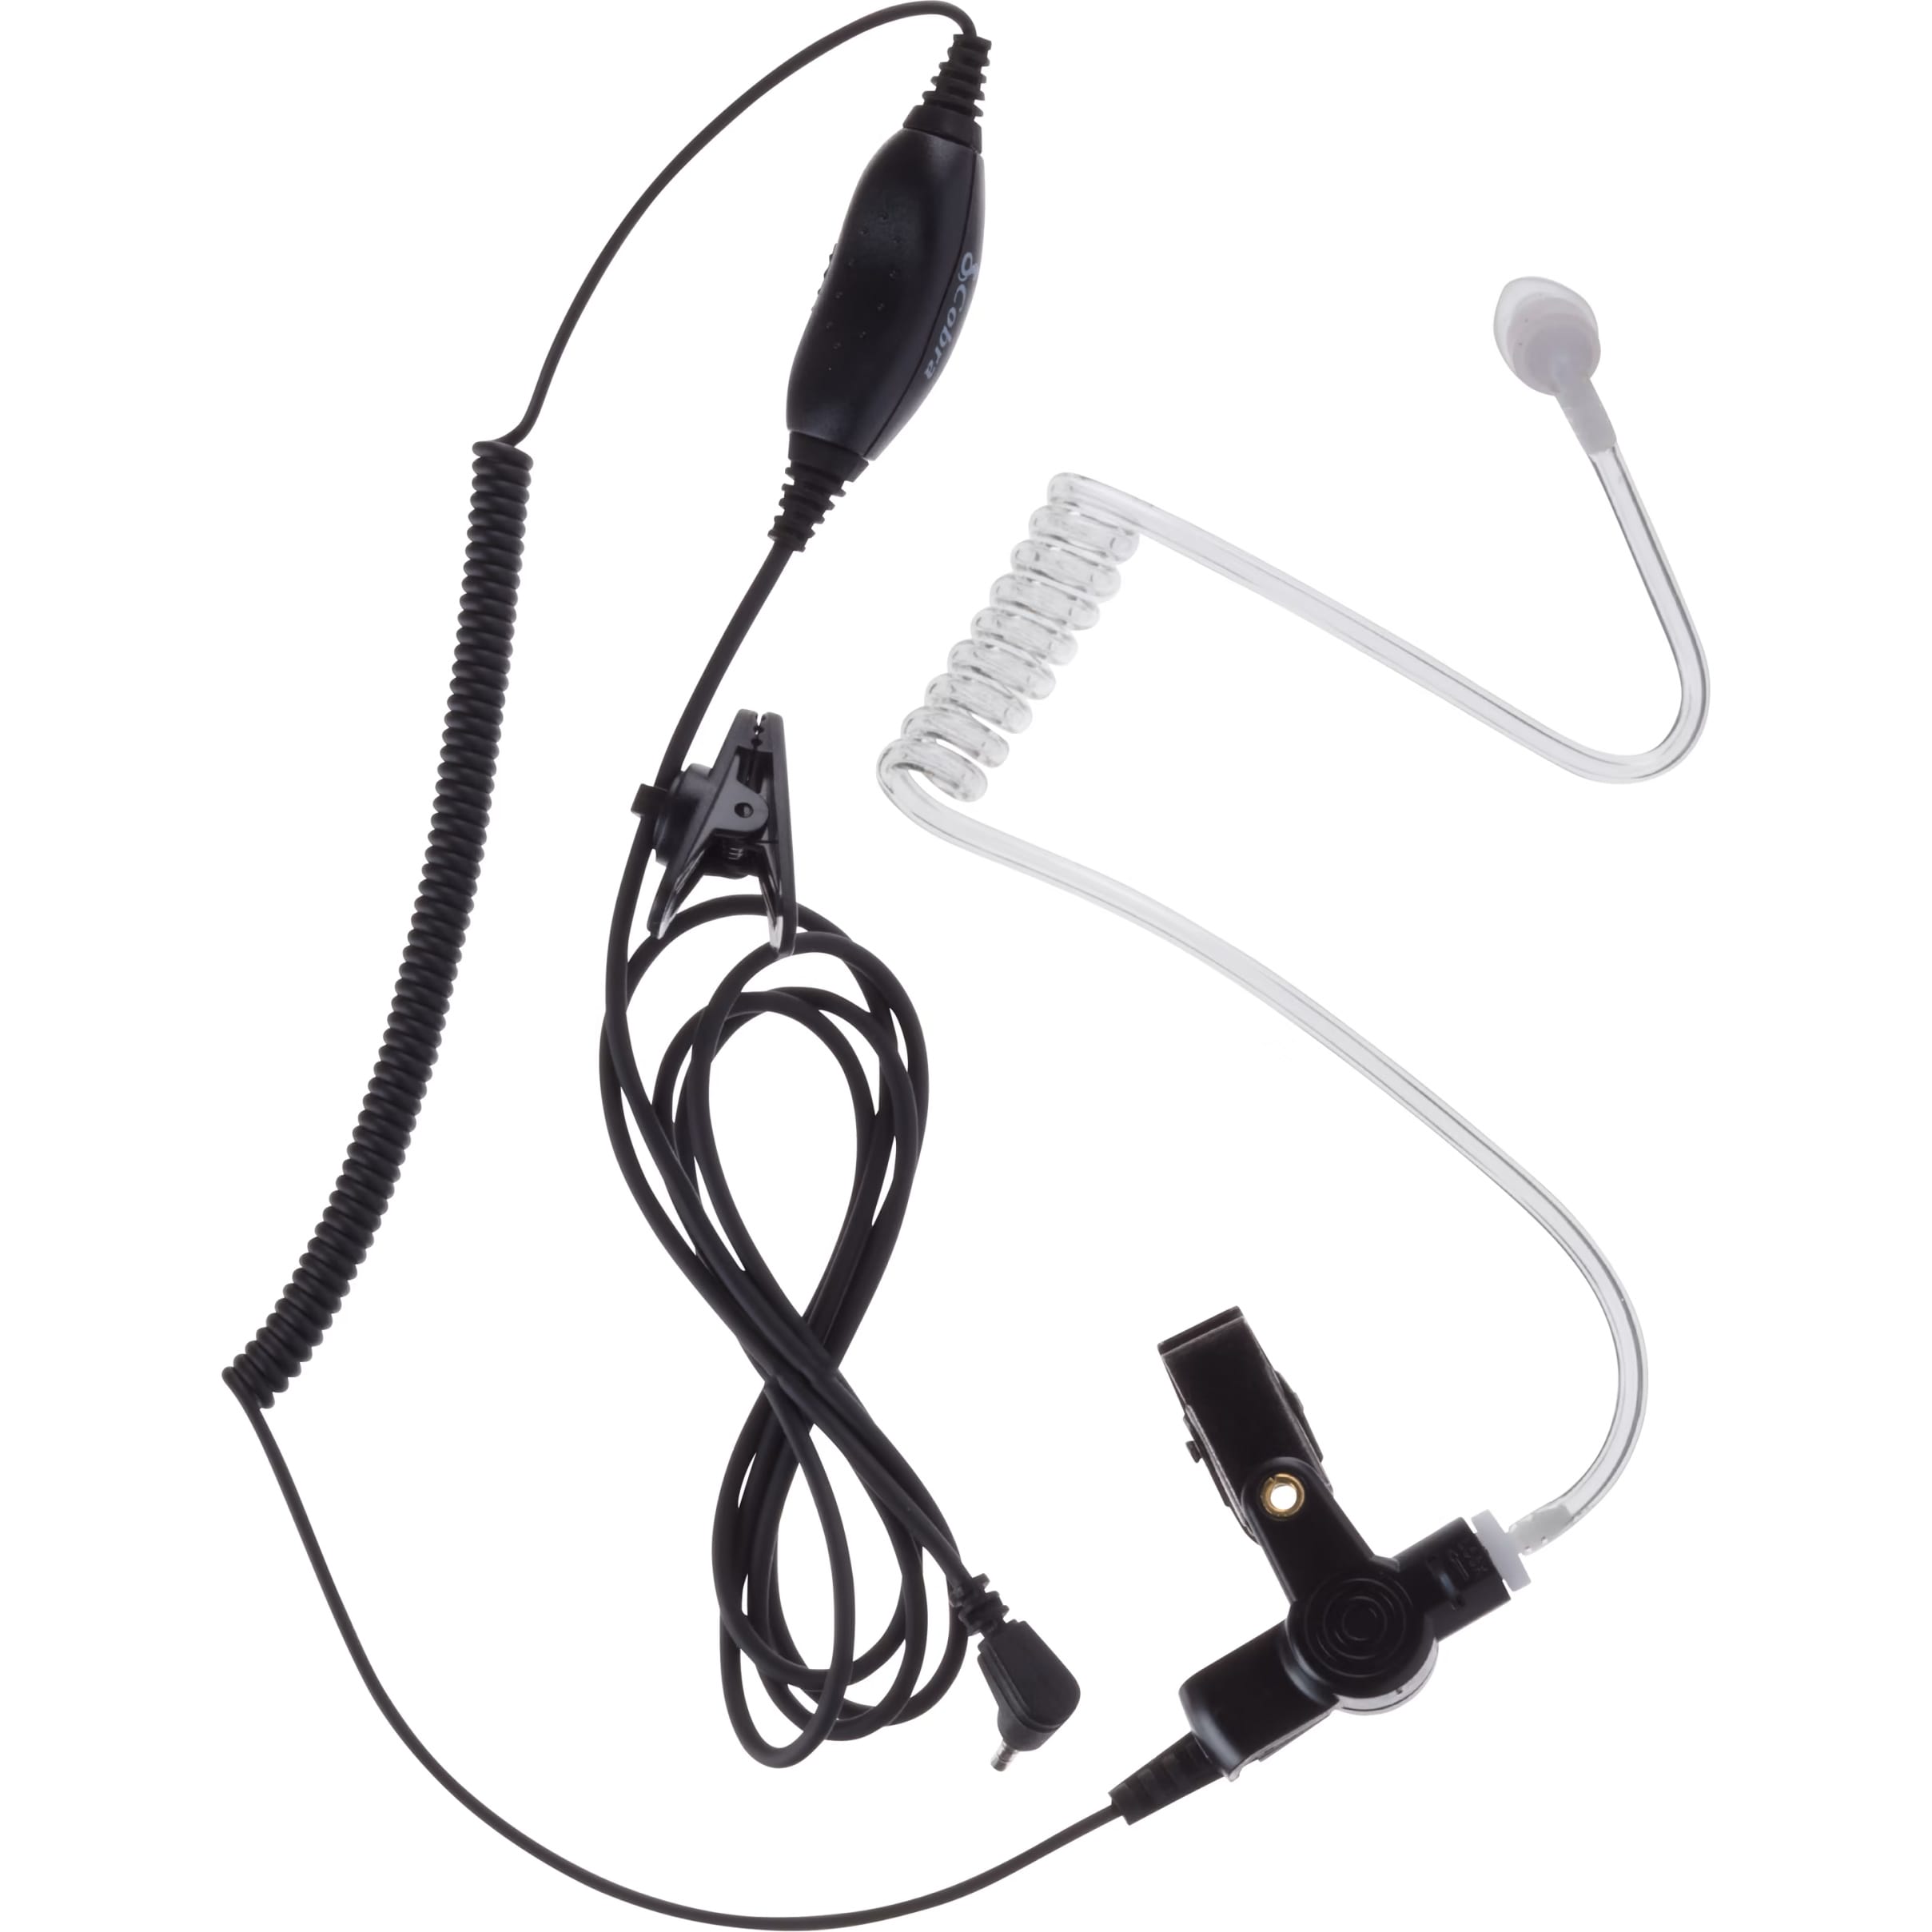 Cobra® Radio Surveillance Headset